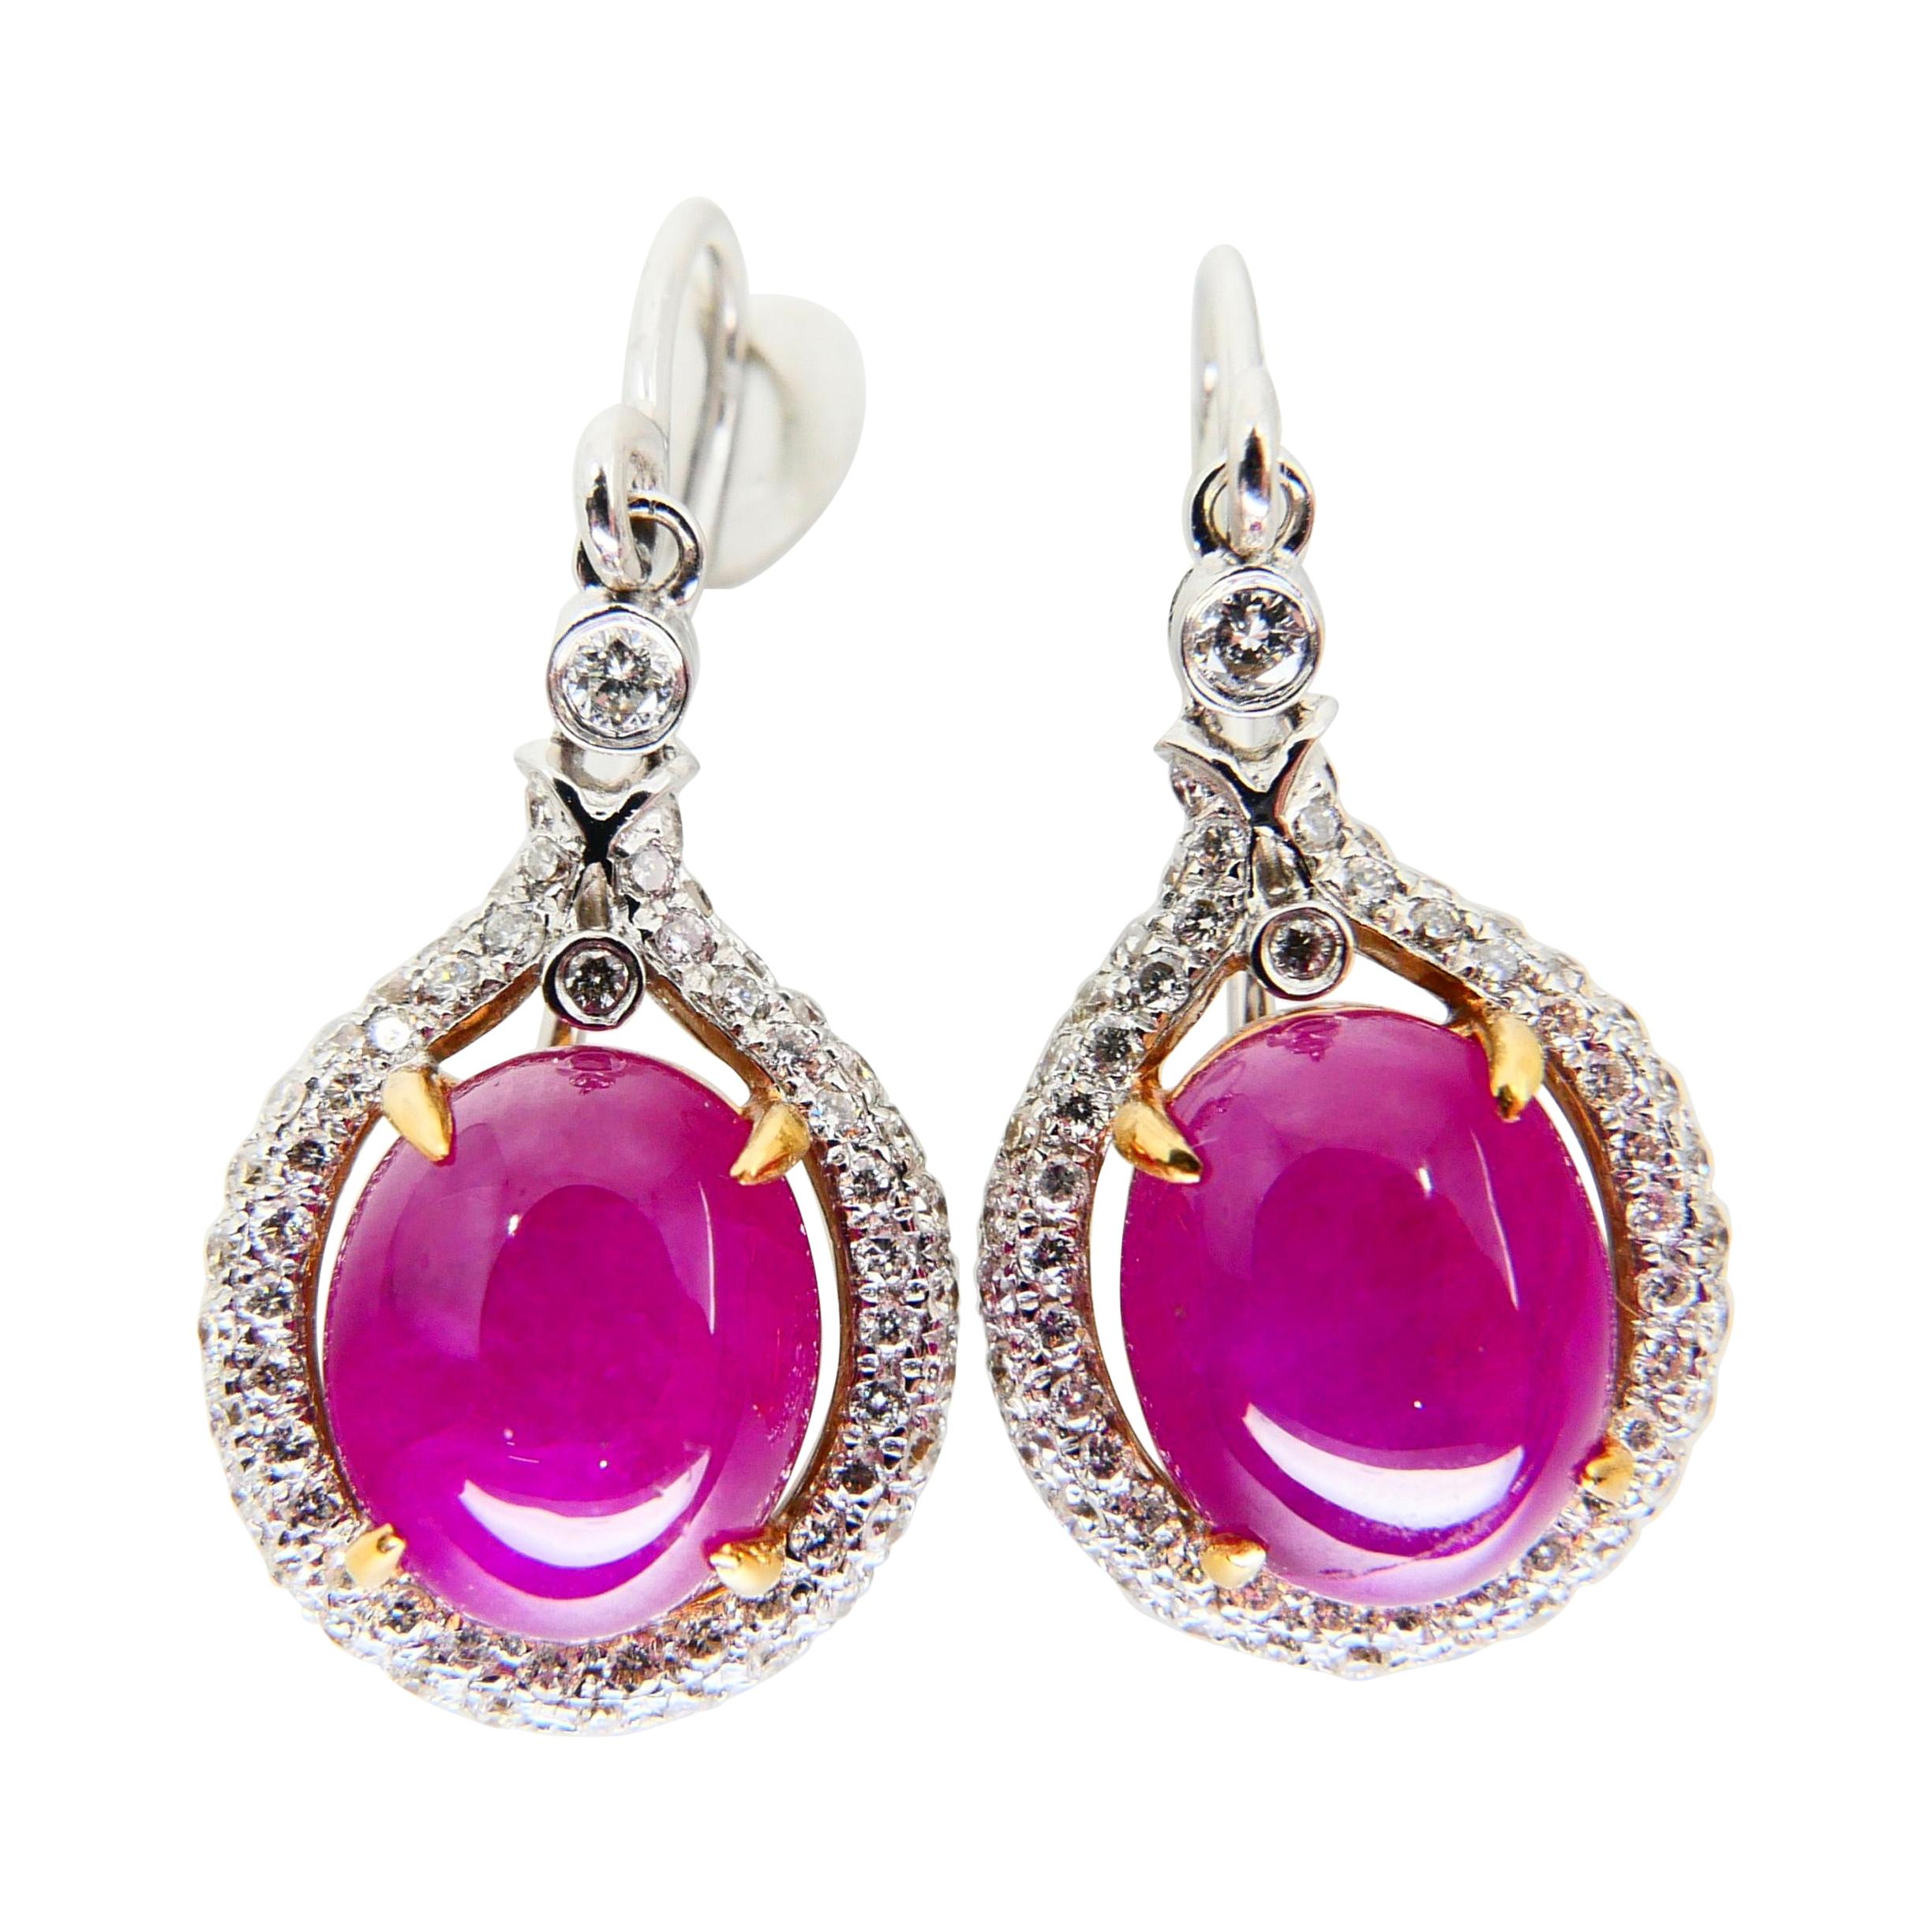 Burma Ruby 4.98 Carat and Diamond Earrings, 18 Karat White Gold